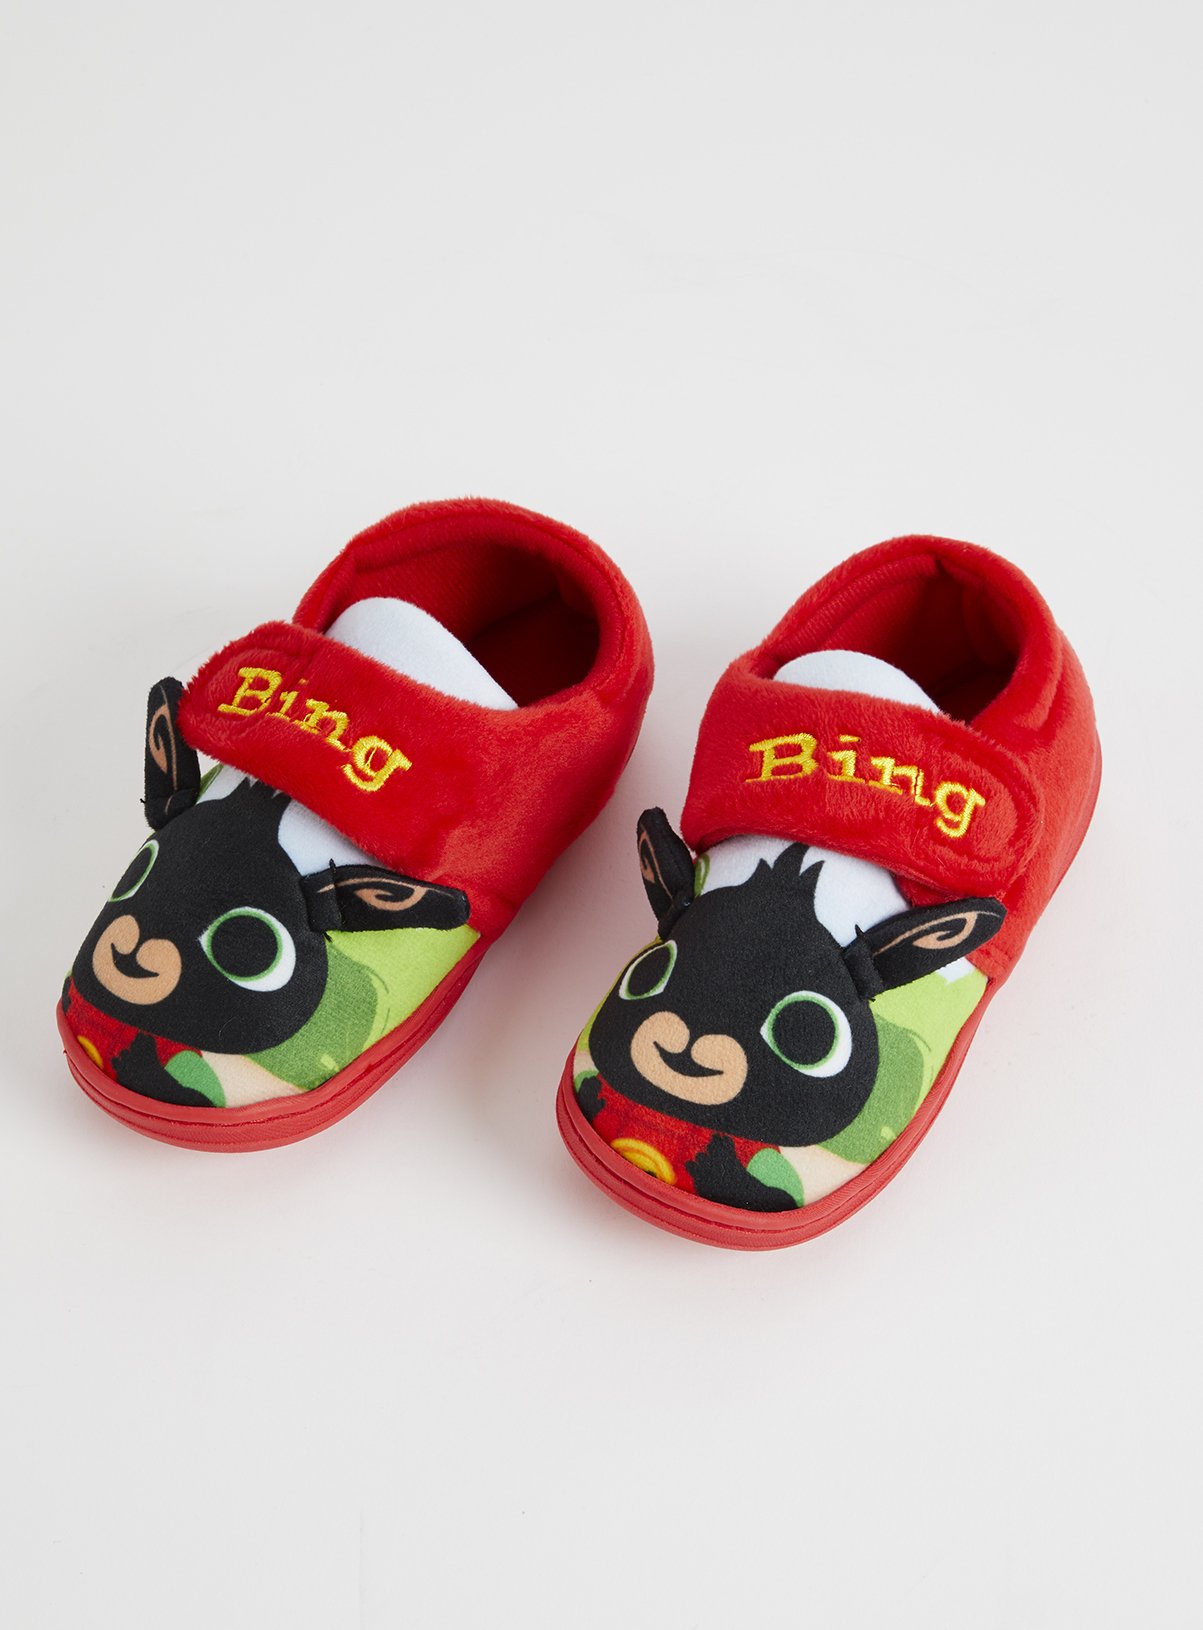 bing slippers